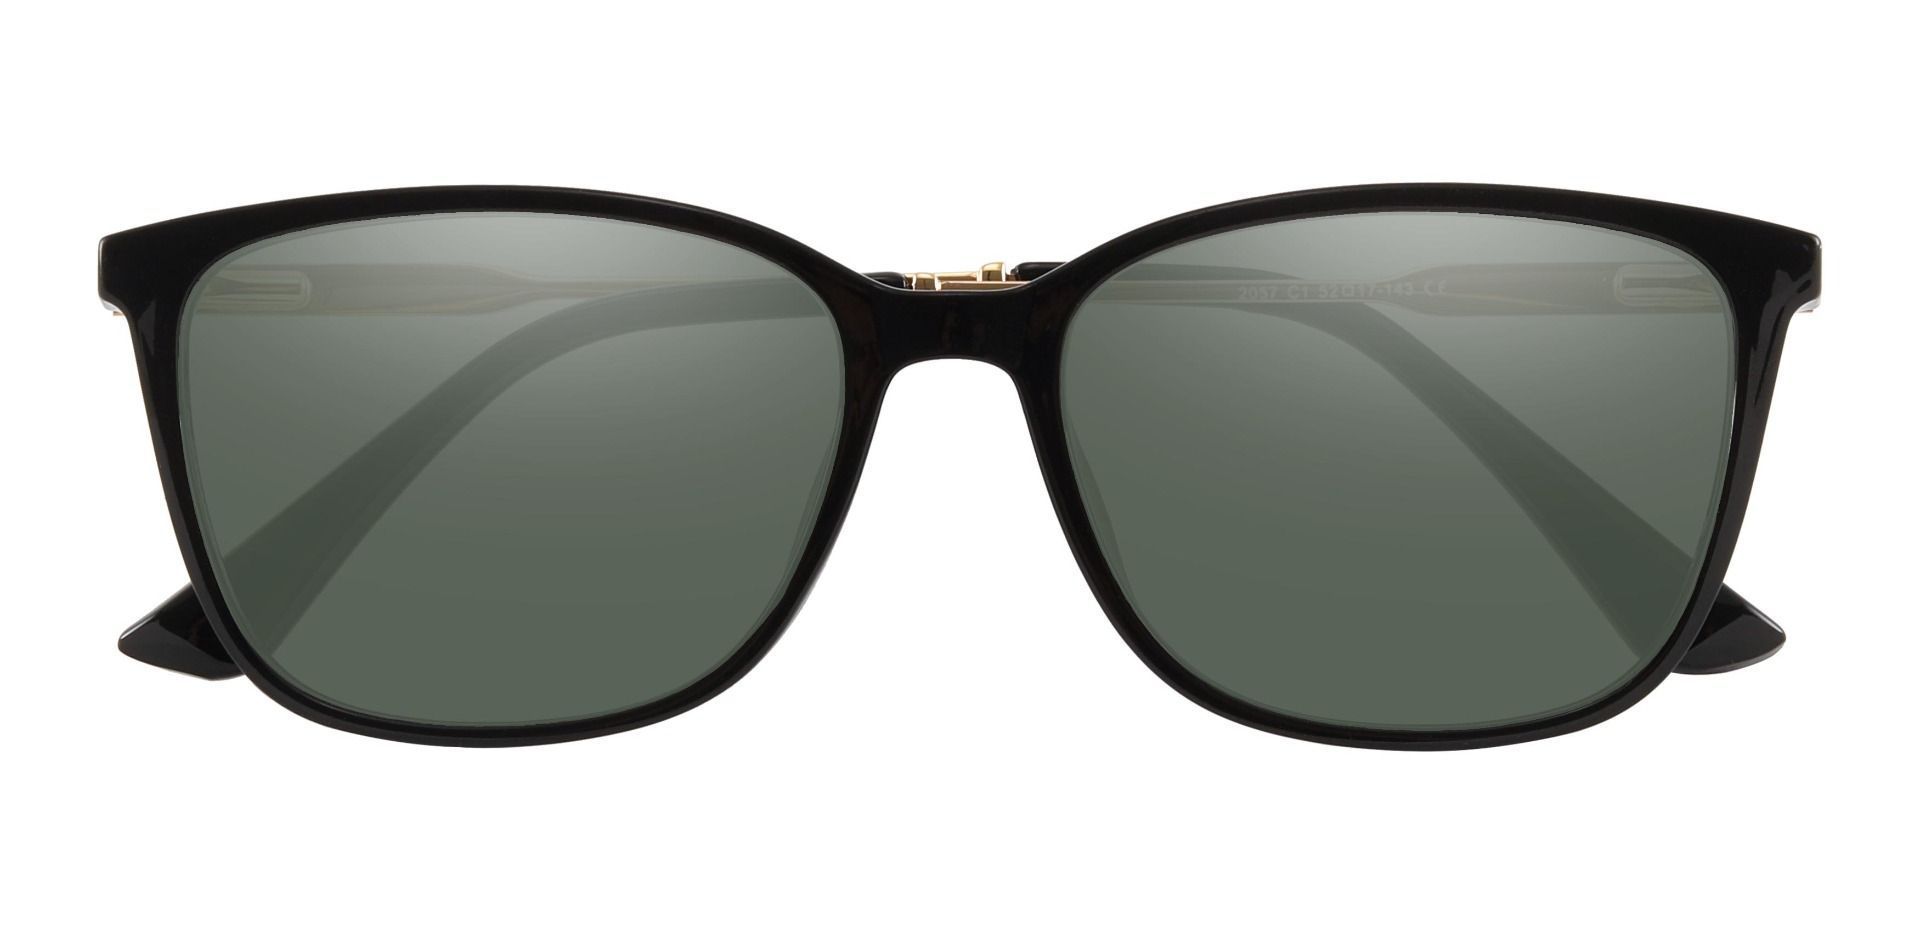 Miami Rectangle Prescription Sunglasses - Black Frame With Green Lenses